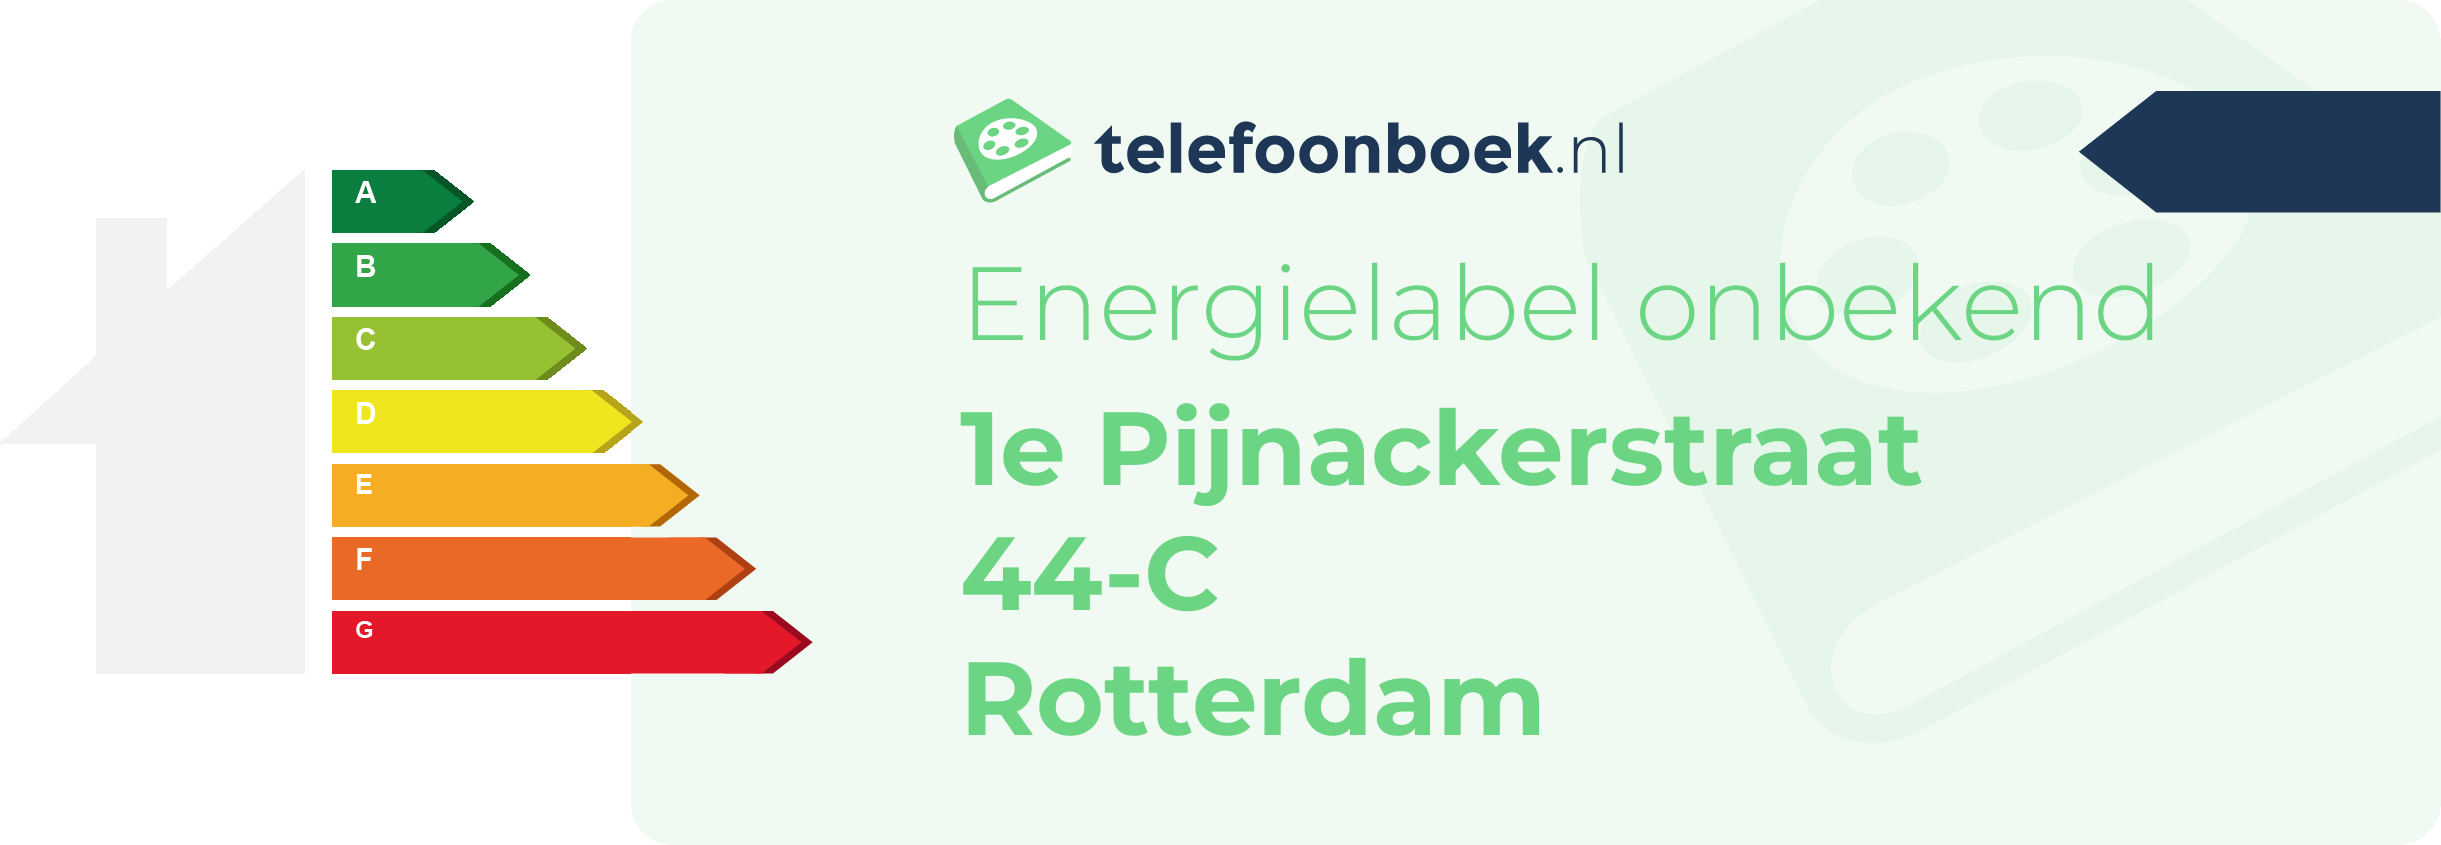 Energielabel 1e Pijnackerstraat 44-C Rotterdam